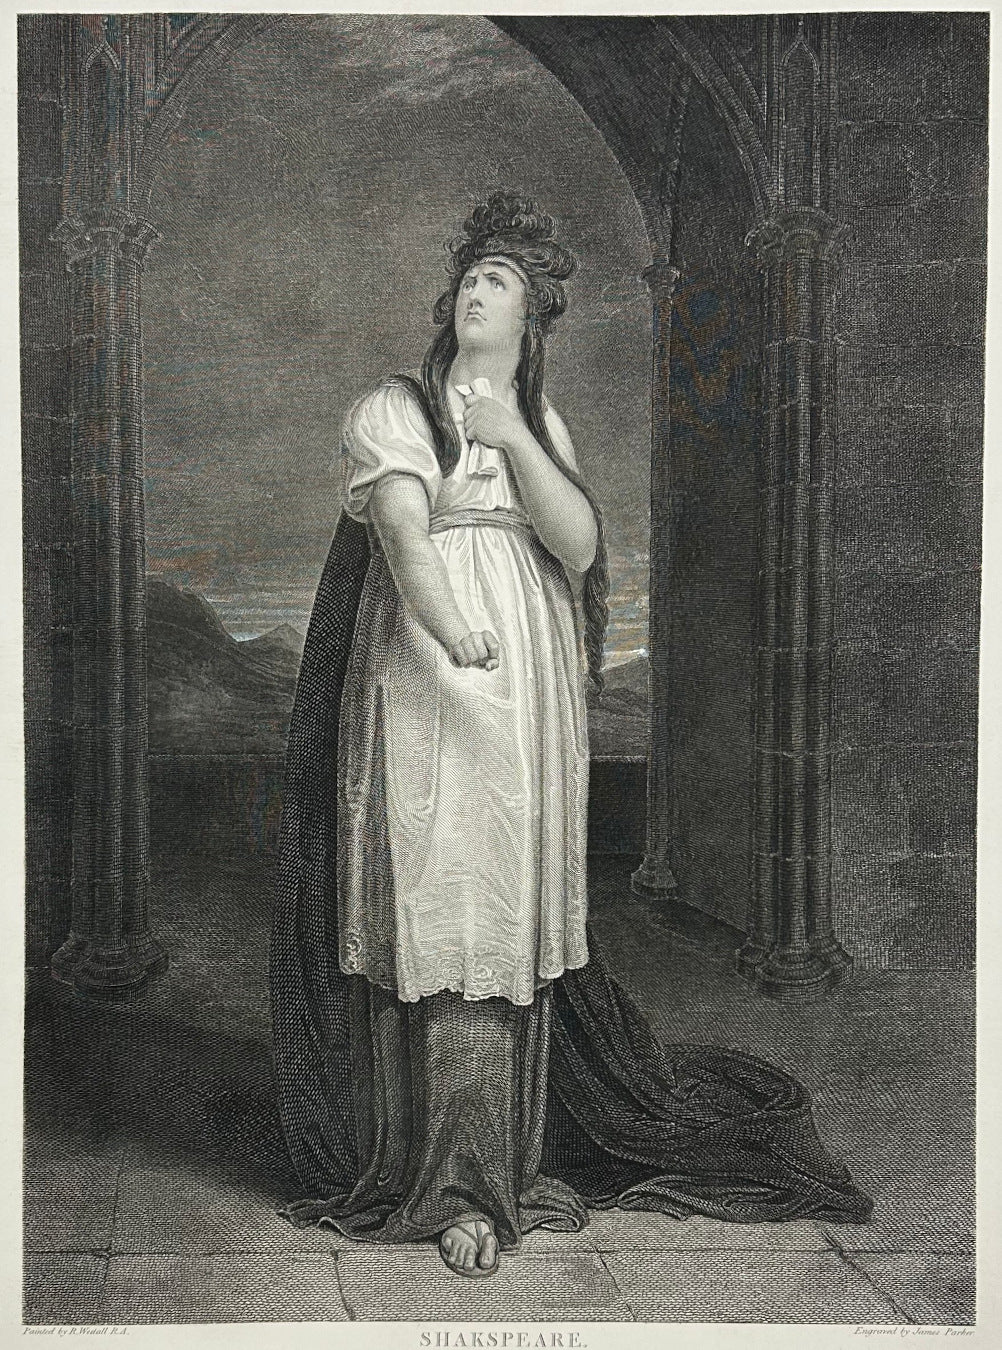 Westall, Richard Plate 47. “Macbeth, Act I, Scene v. Macbeth’s Castle. Lady Macbeth